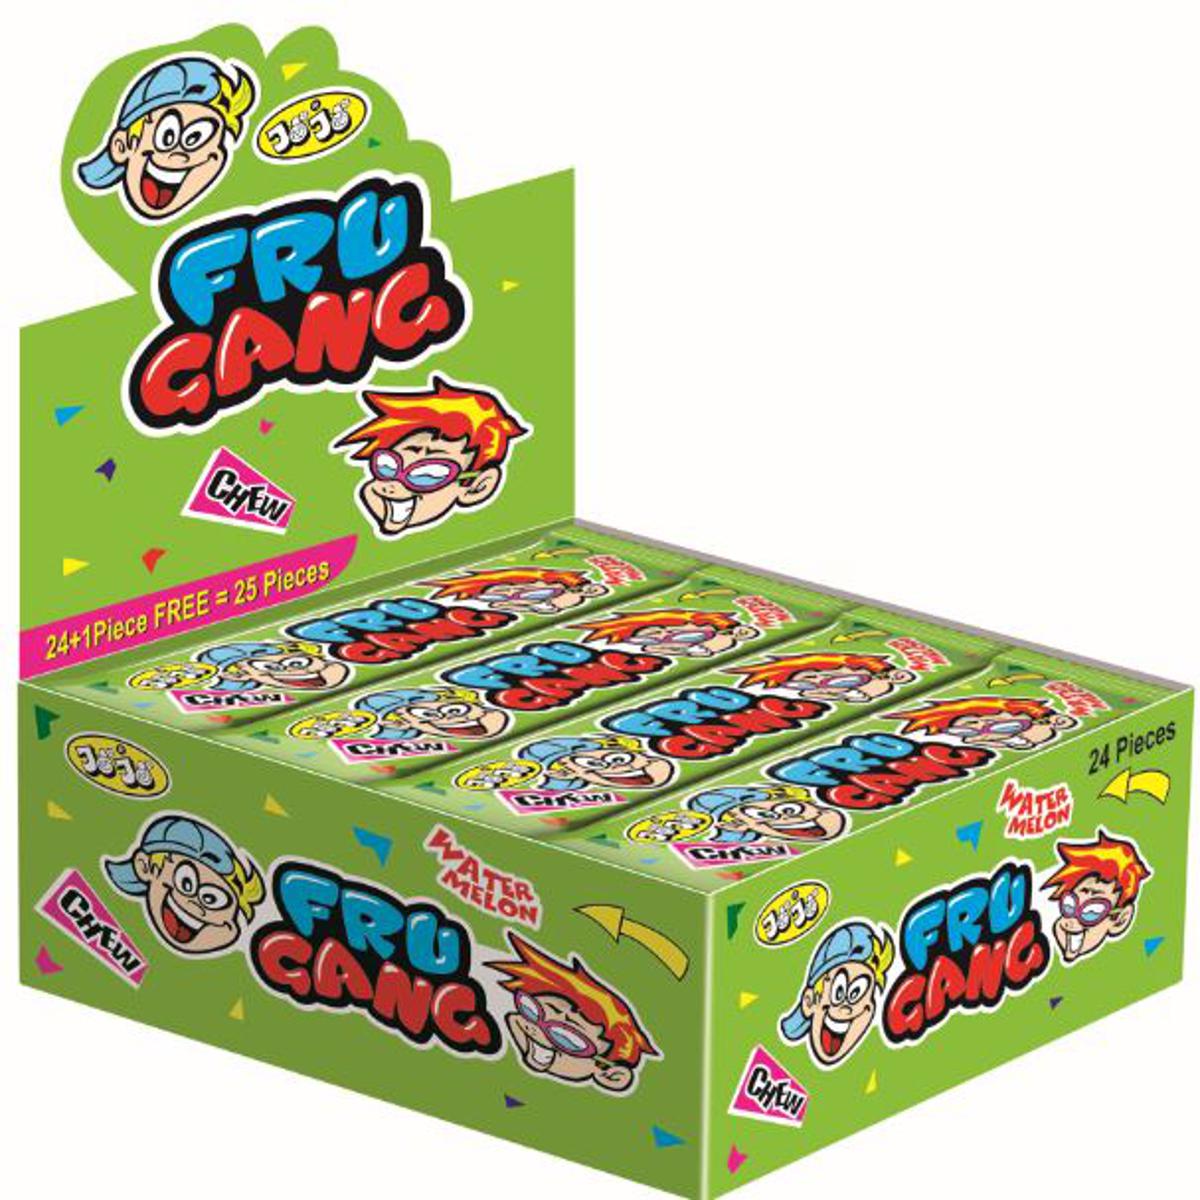 Jojo Fru Gang Chew (24 Pieces + 1 Free) Rs.20